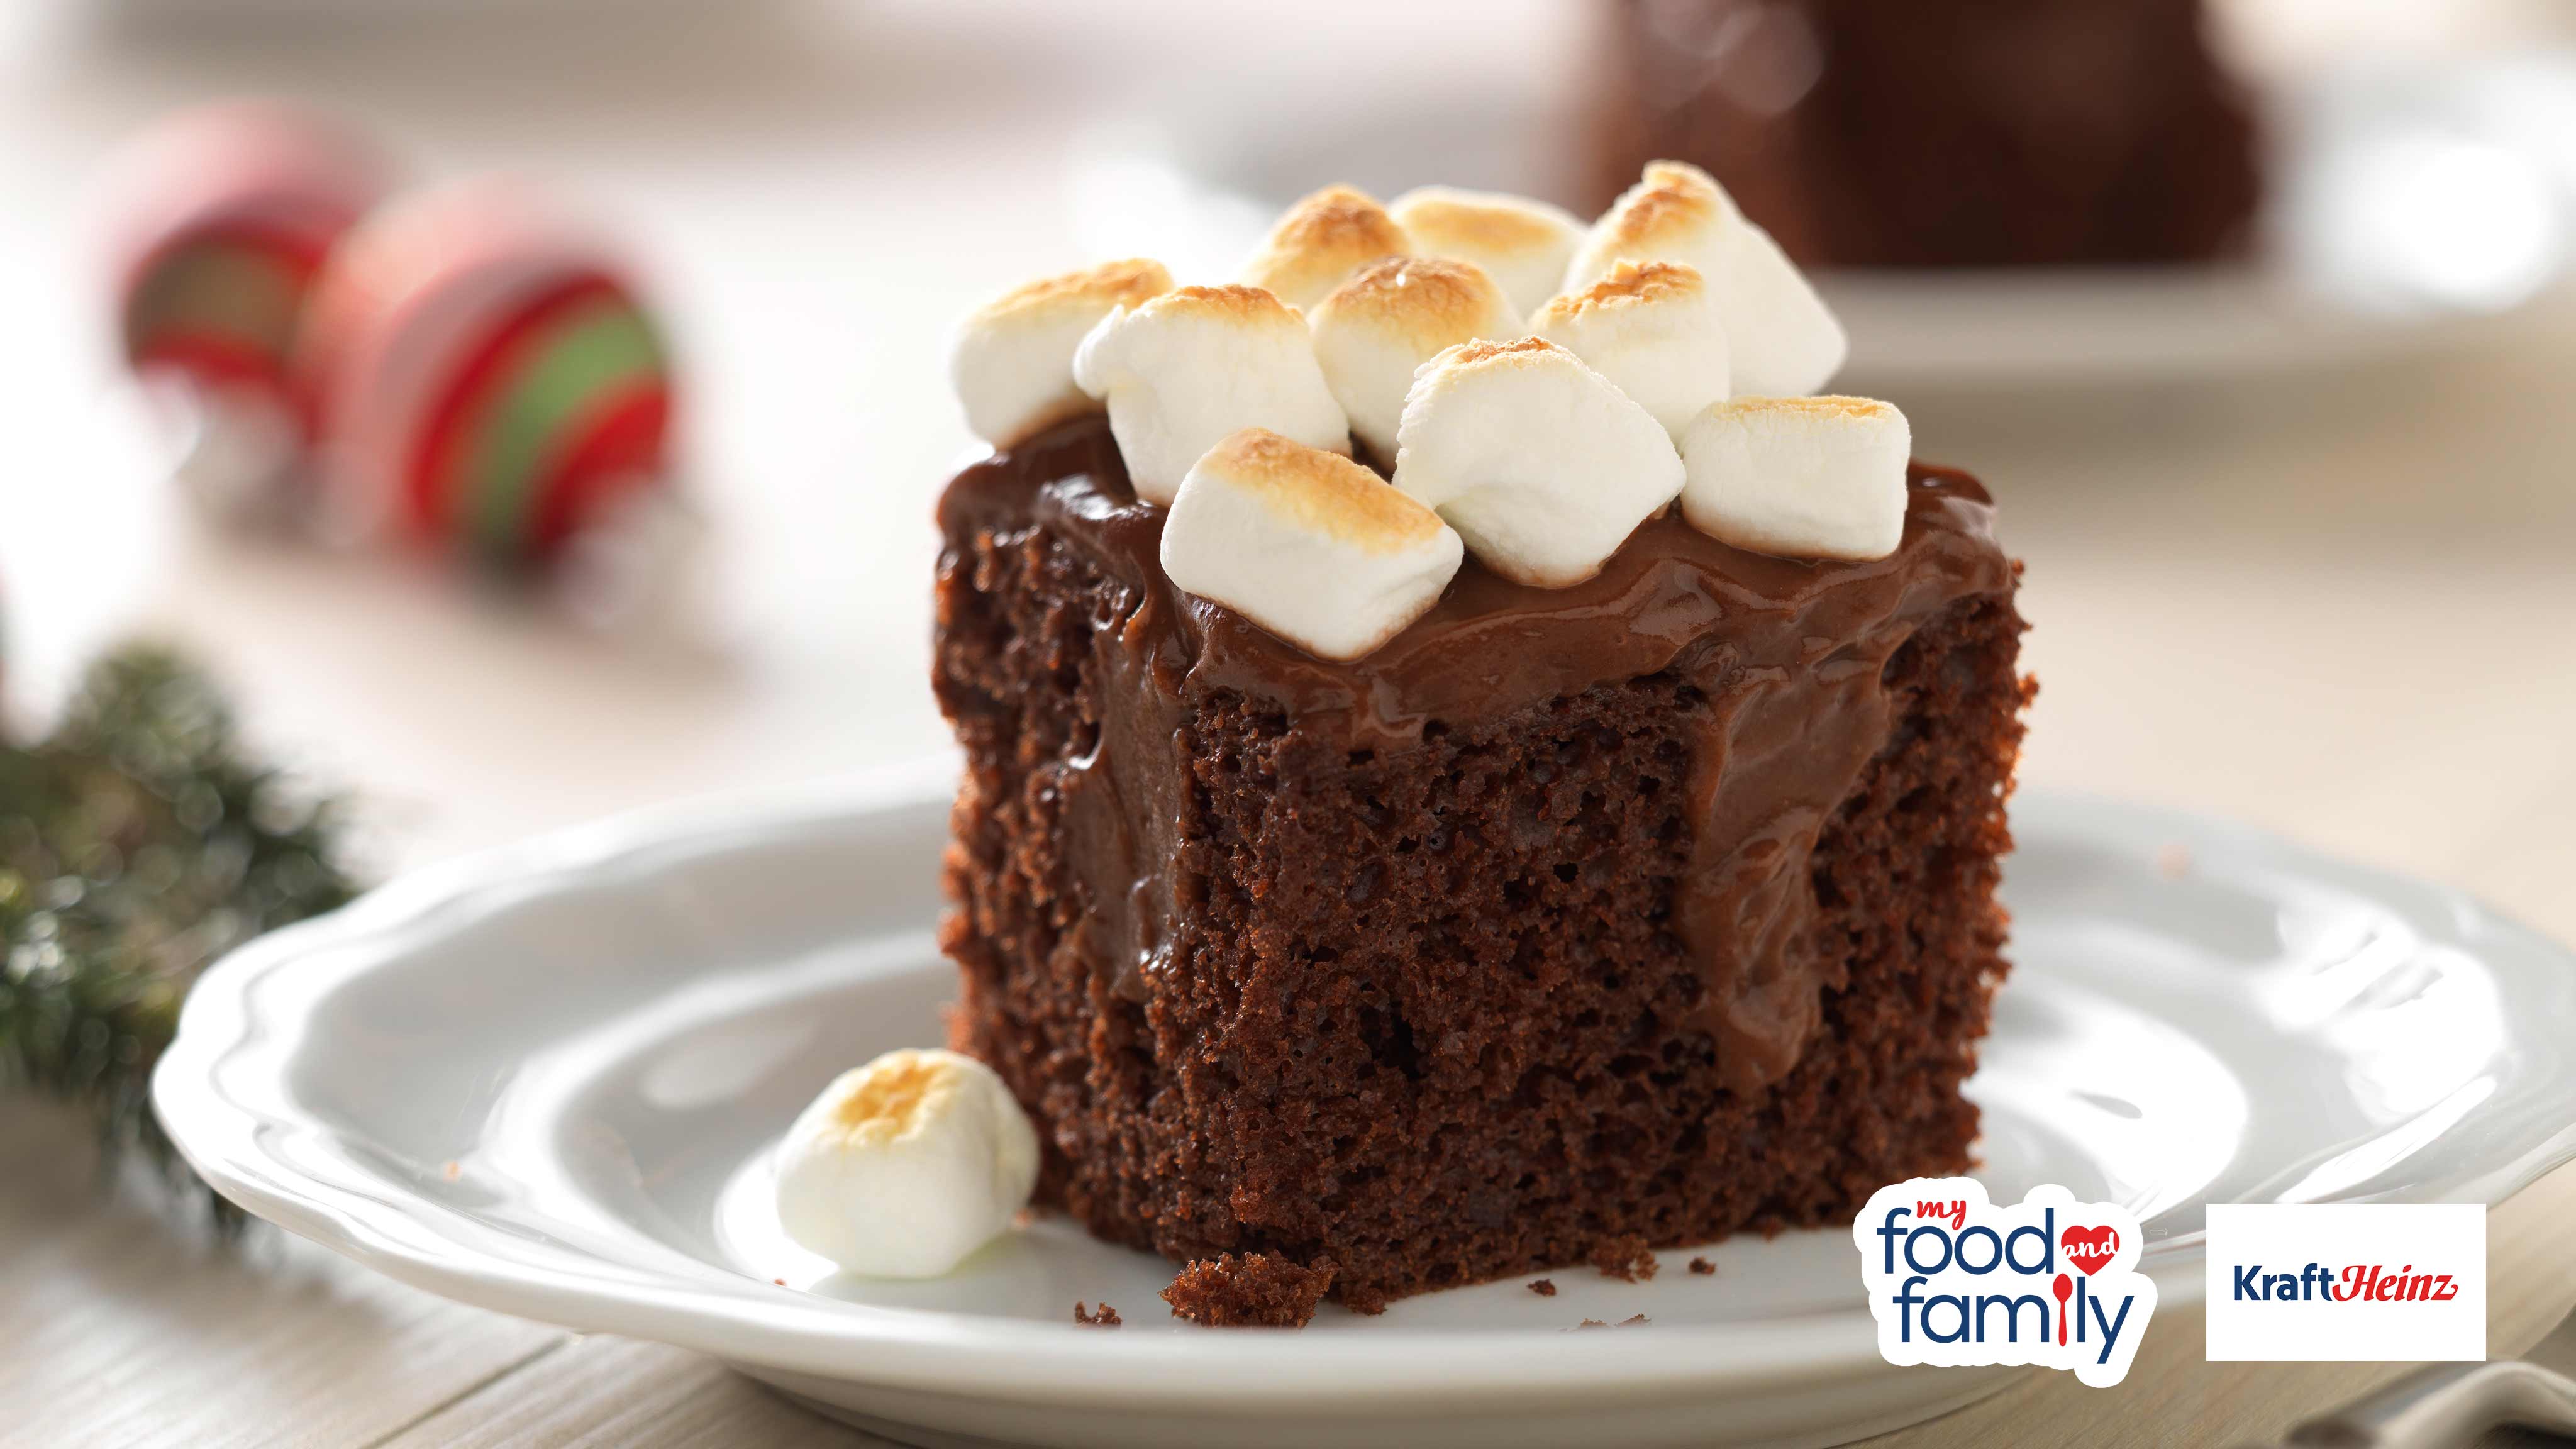 Image for Recipe Toasted Marshmallow-Chocolate Pudding Cake